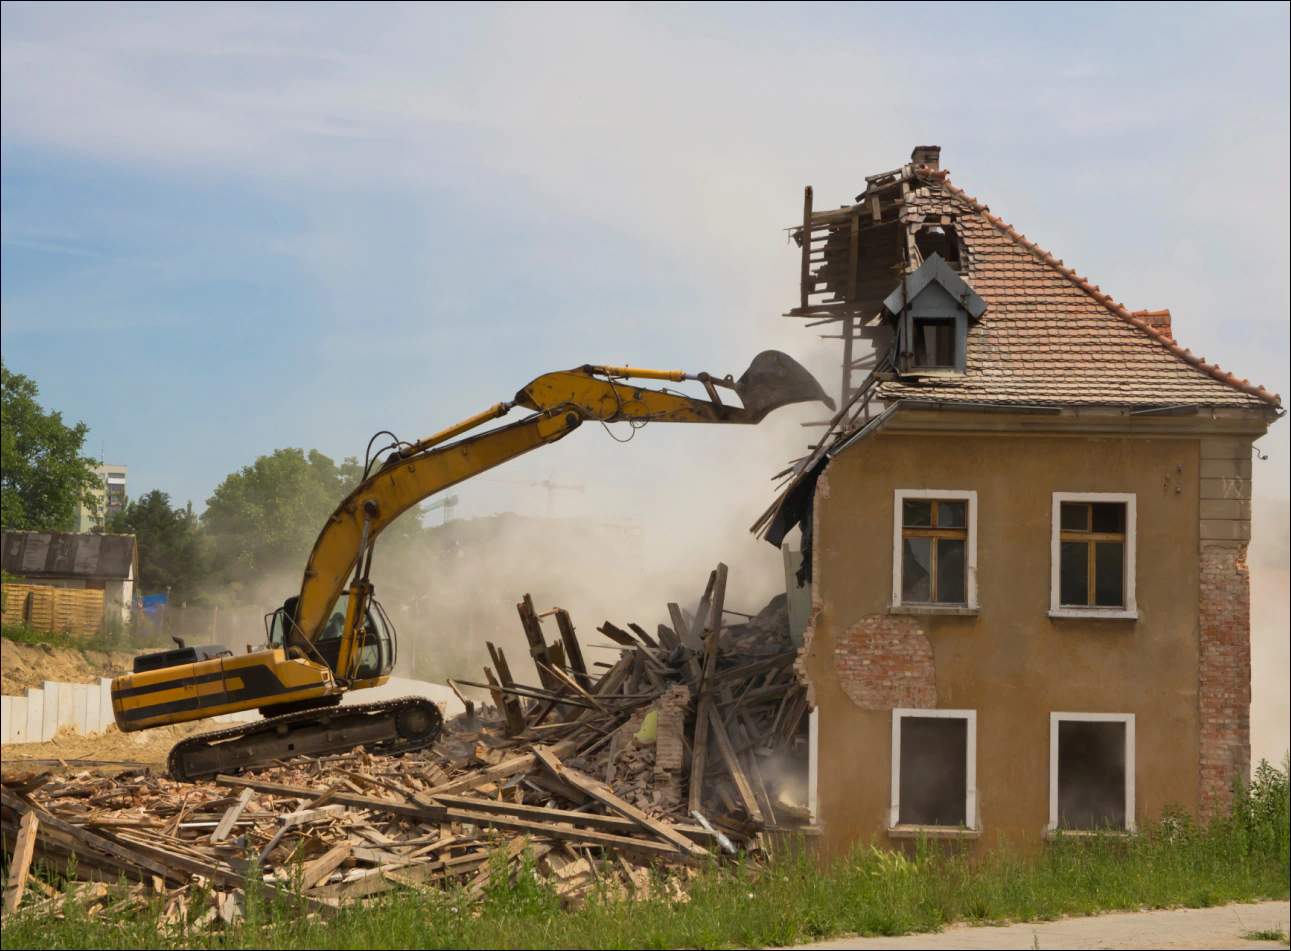 a machine demolishing a house